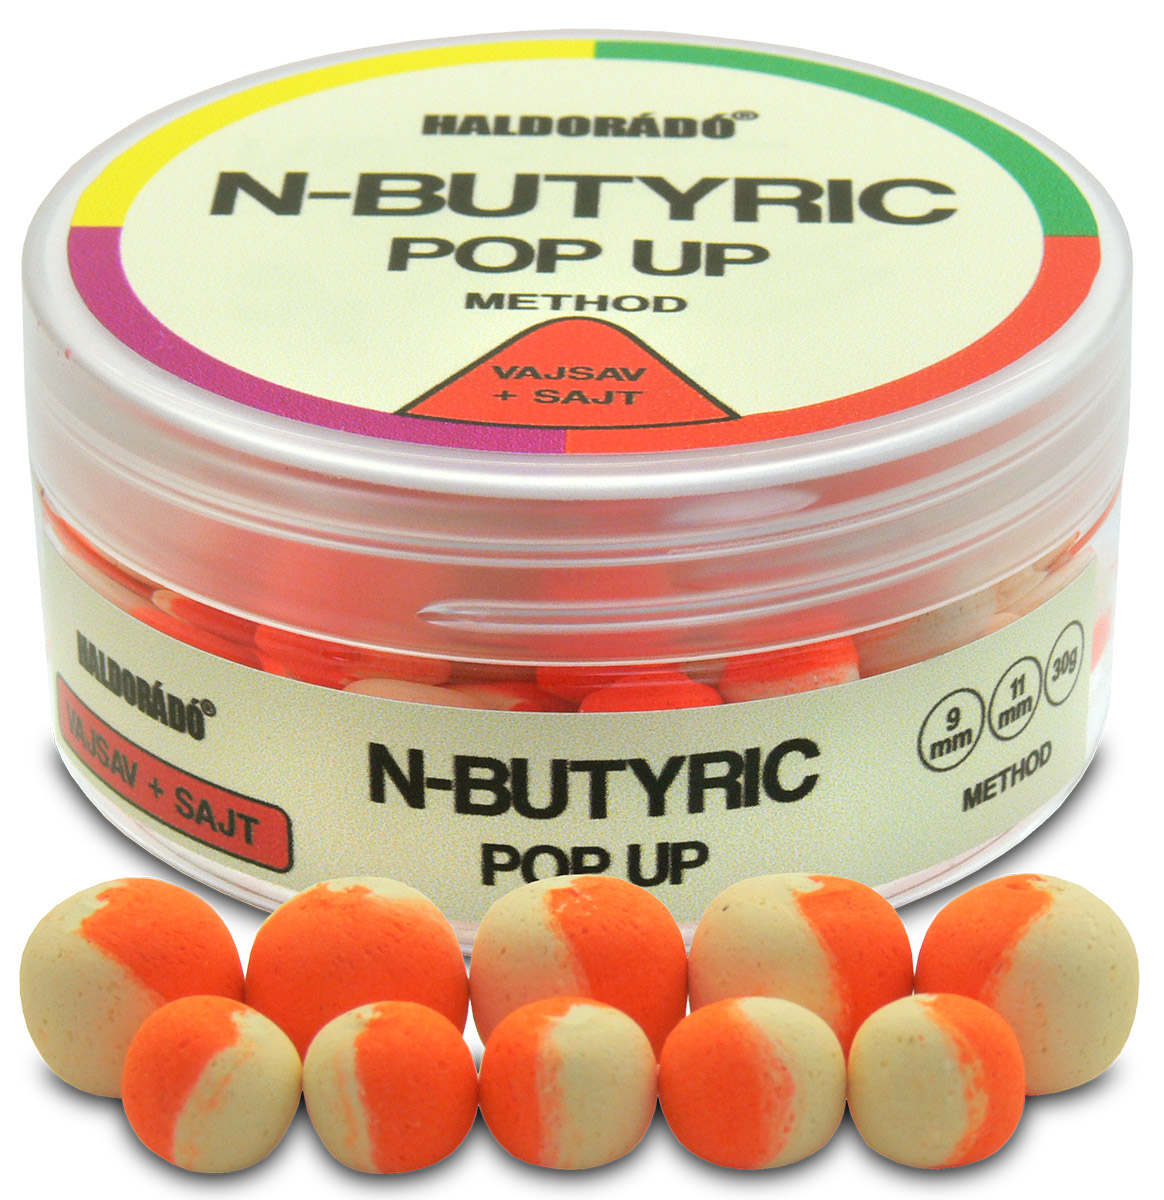 N-Butyric Pop Up Method - Vajsav + Sajt